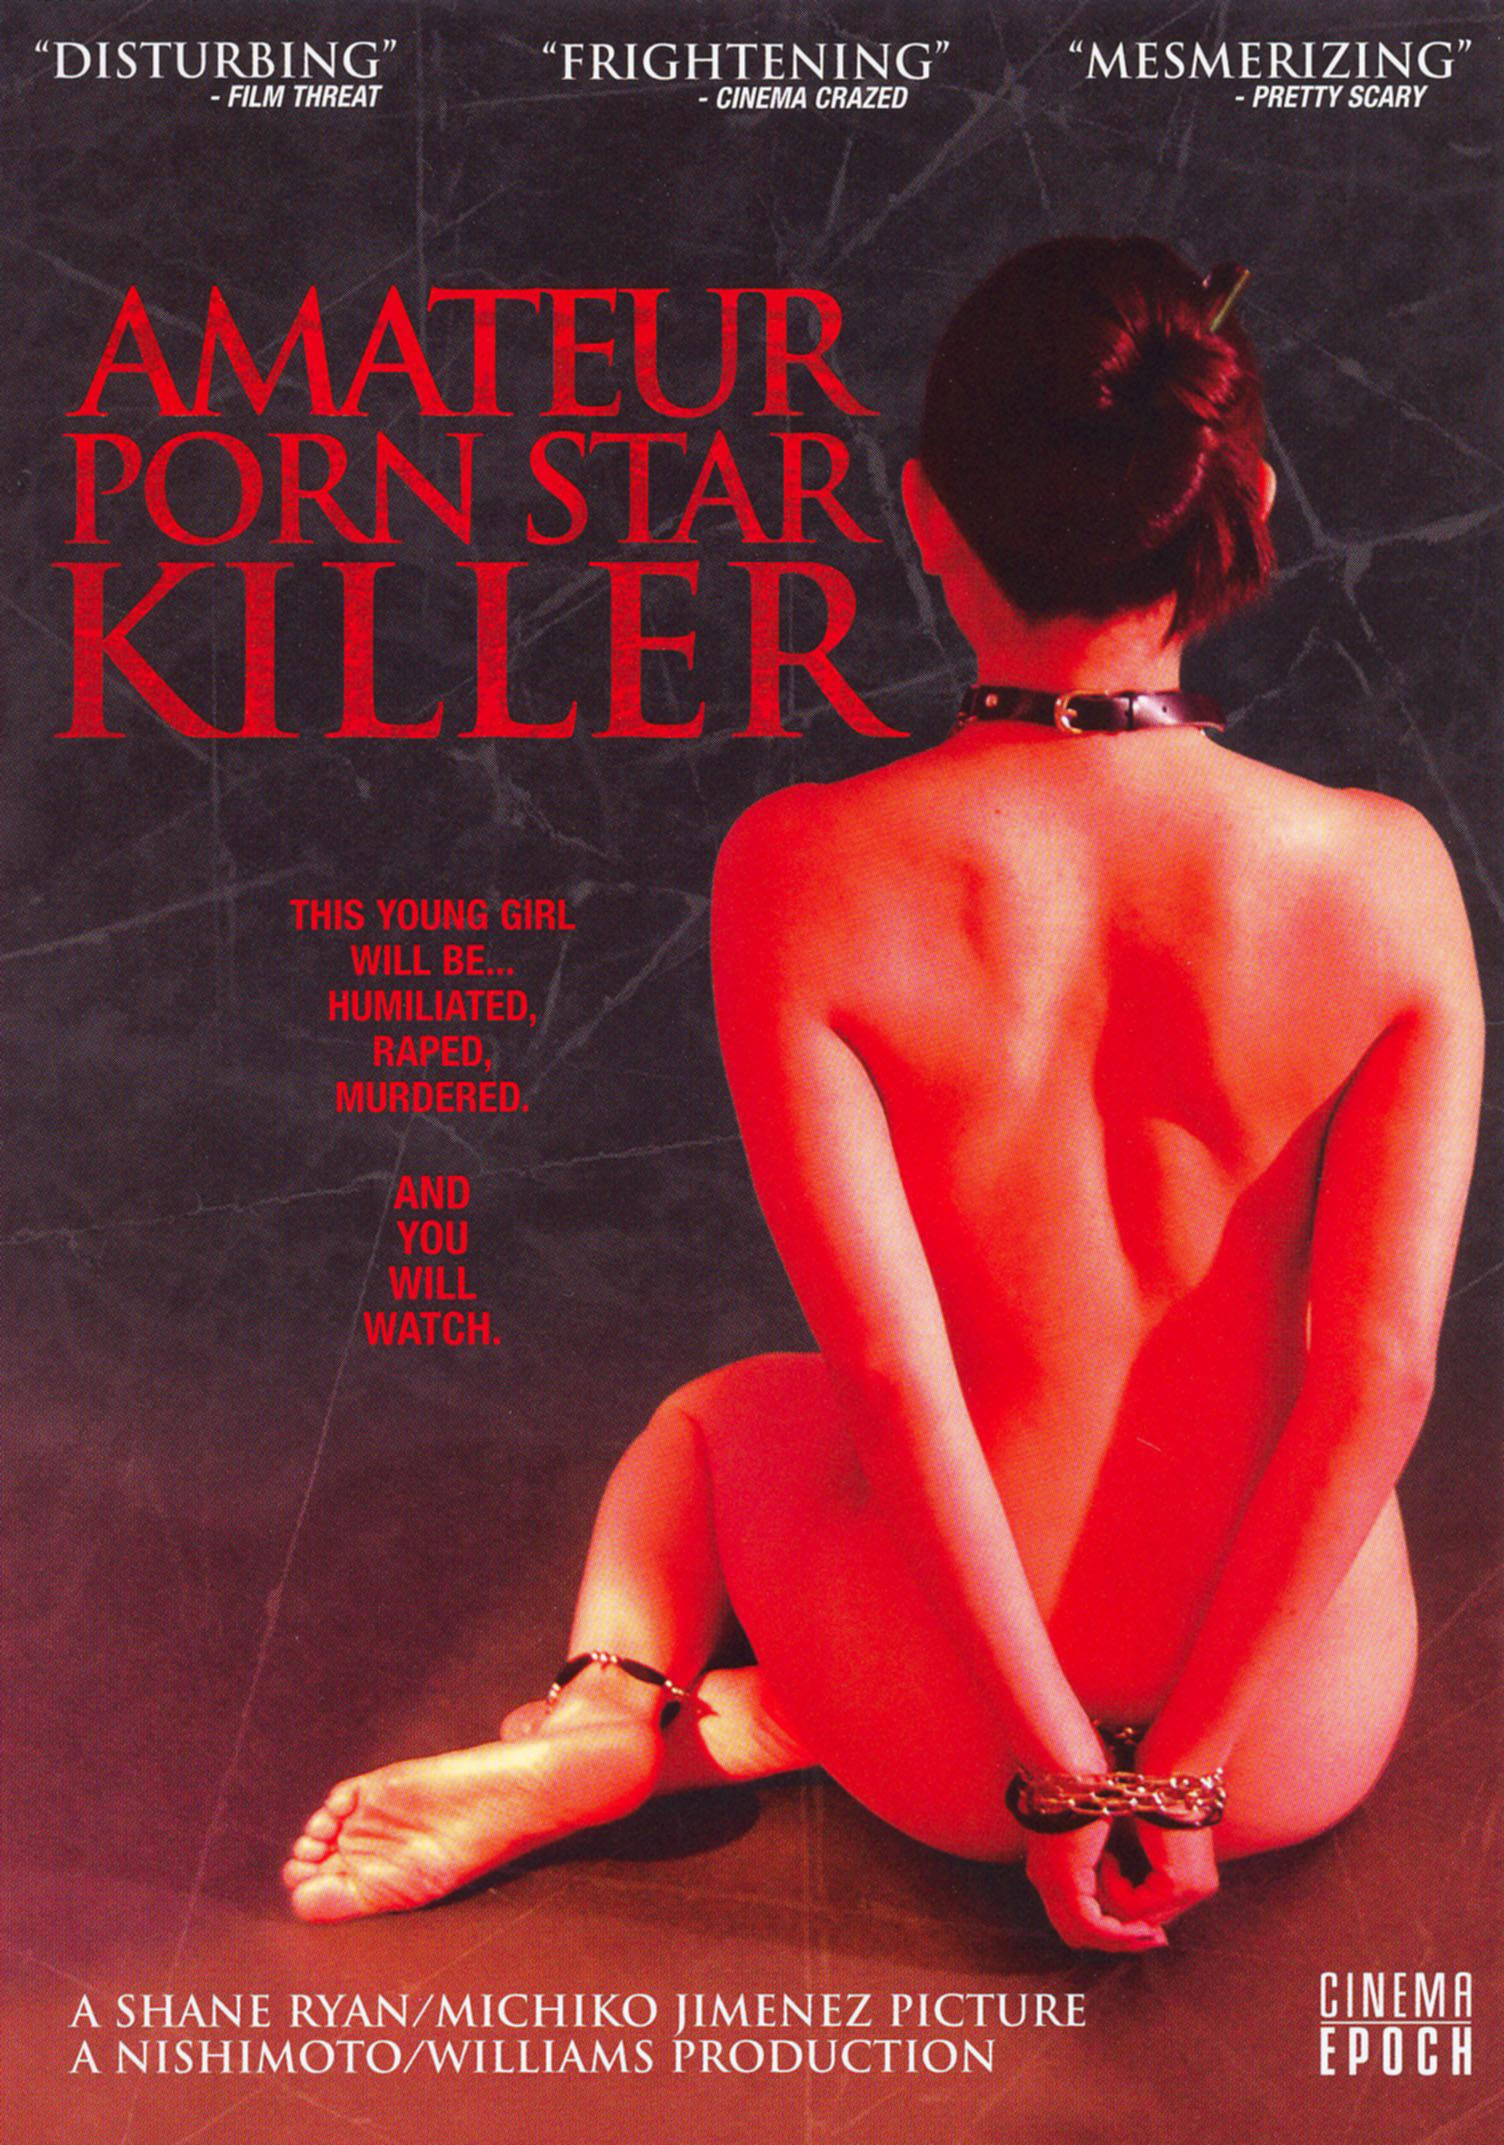 watch amateur porn star killer online